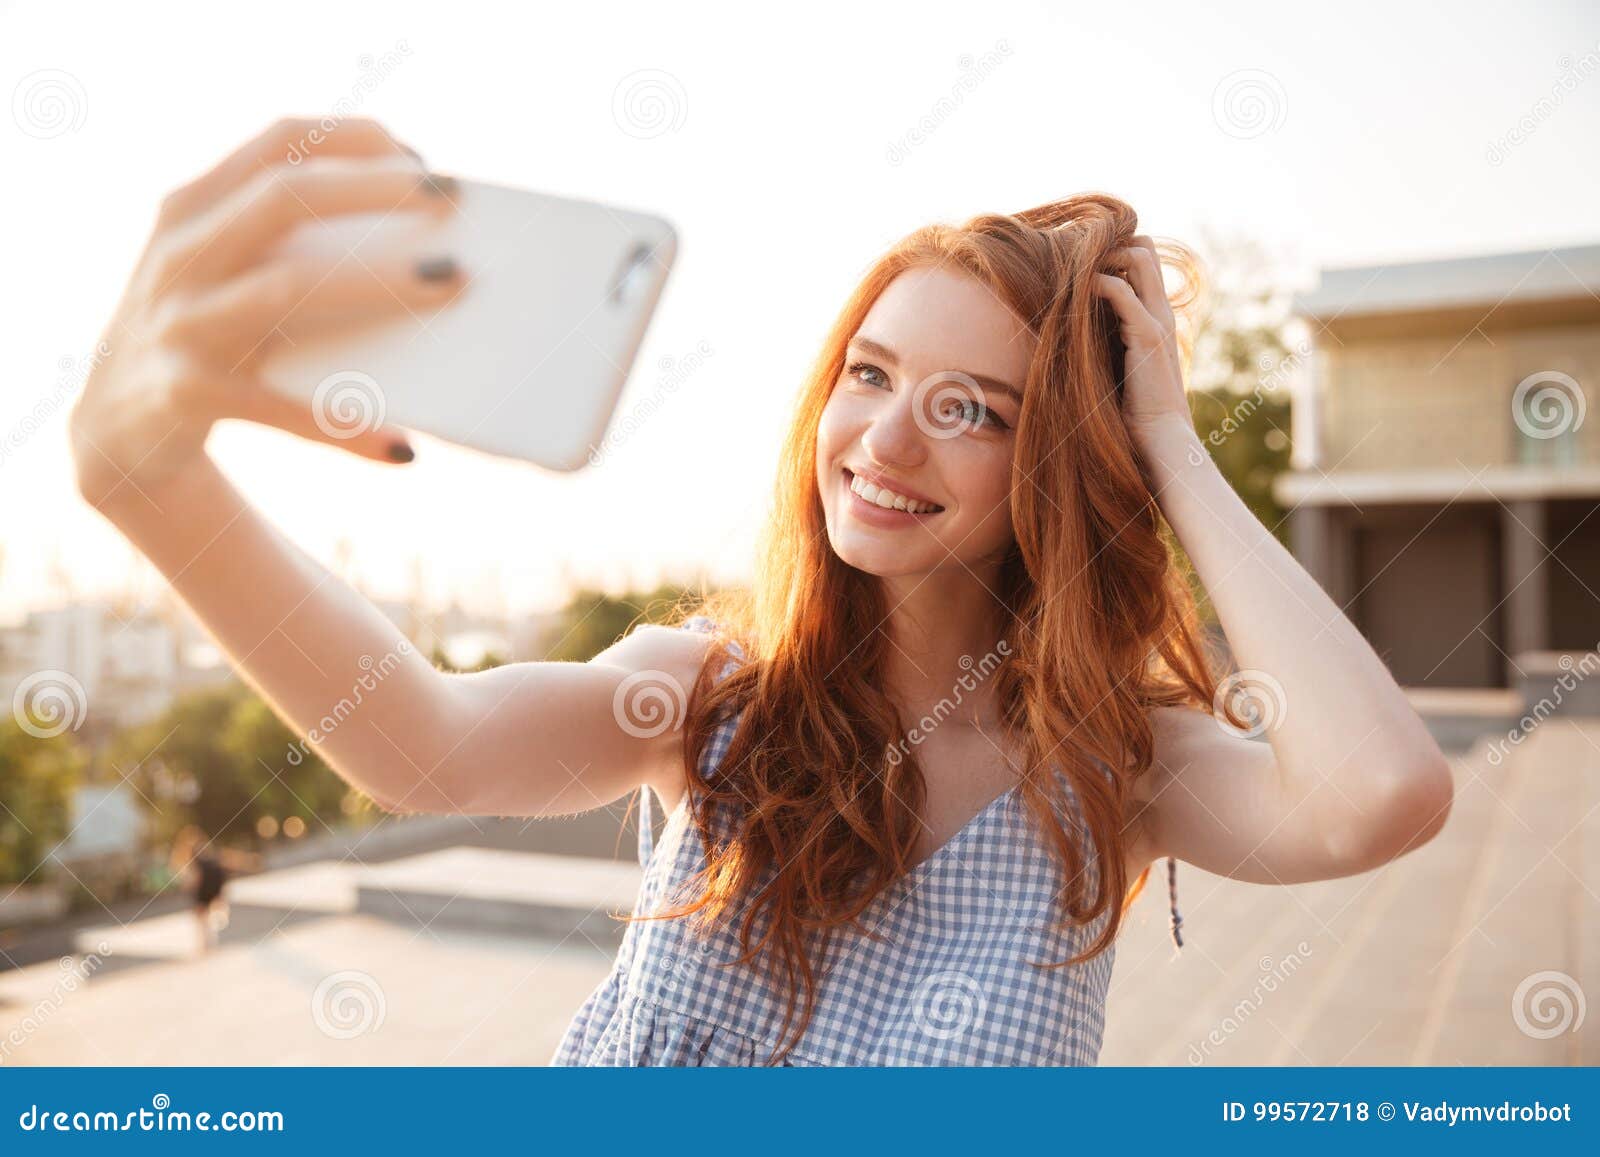 hot female lingerie selfies